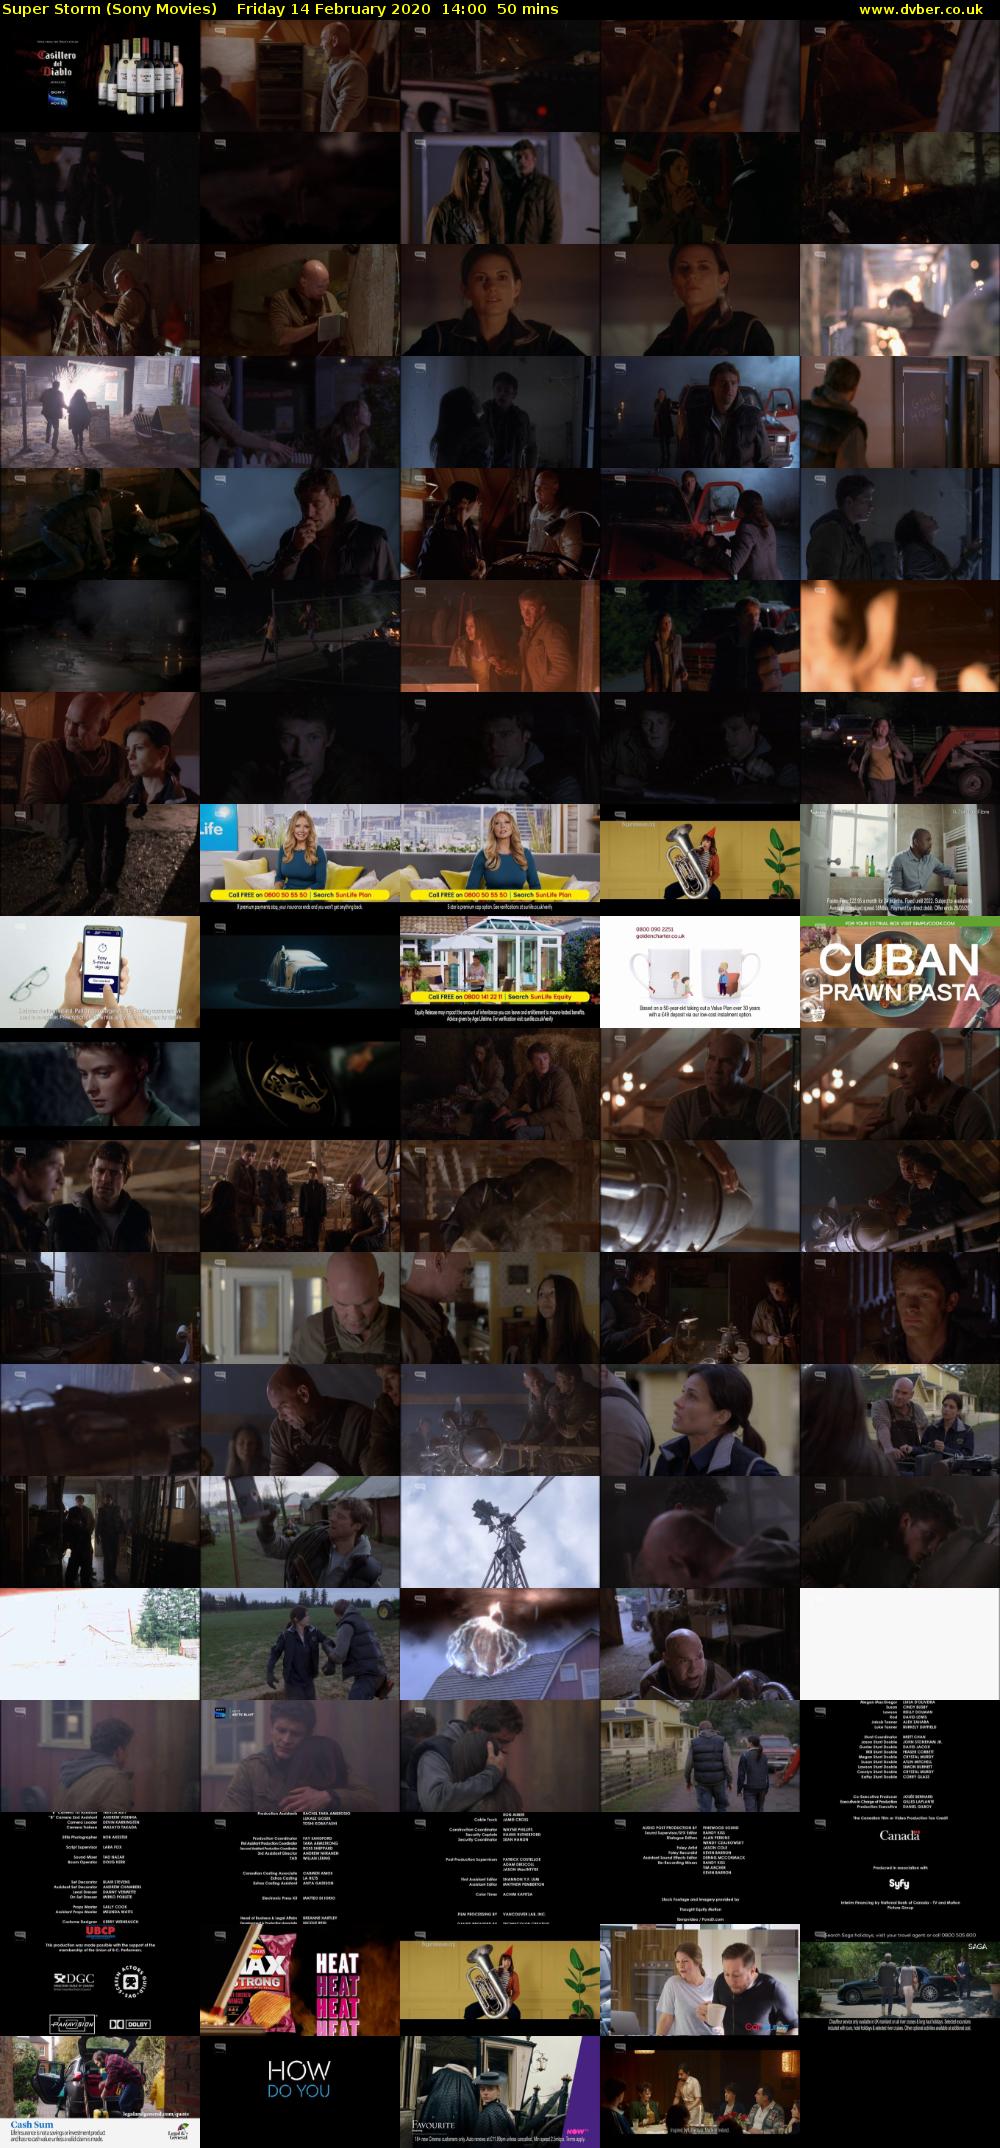 Super Storm (Sony Movies) Friday 14 February 2020 14:00 - 14:50